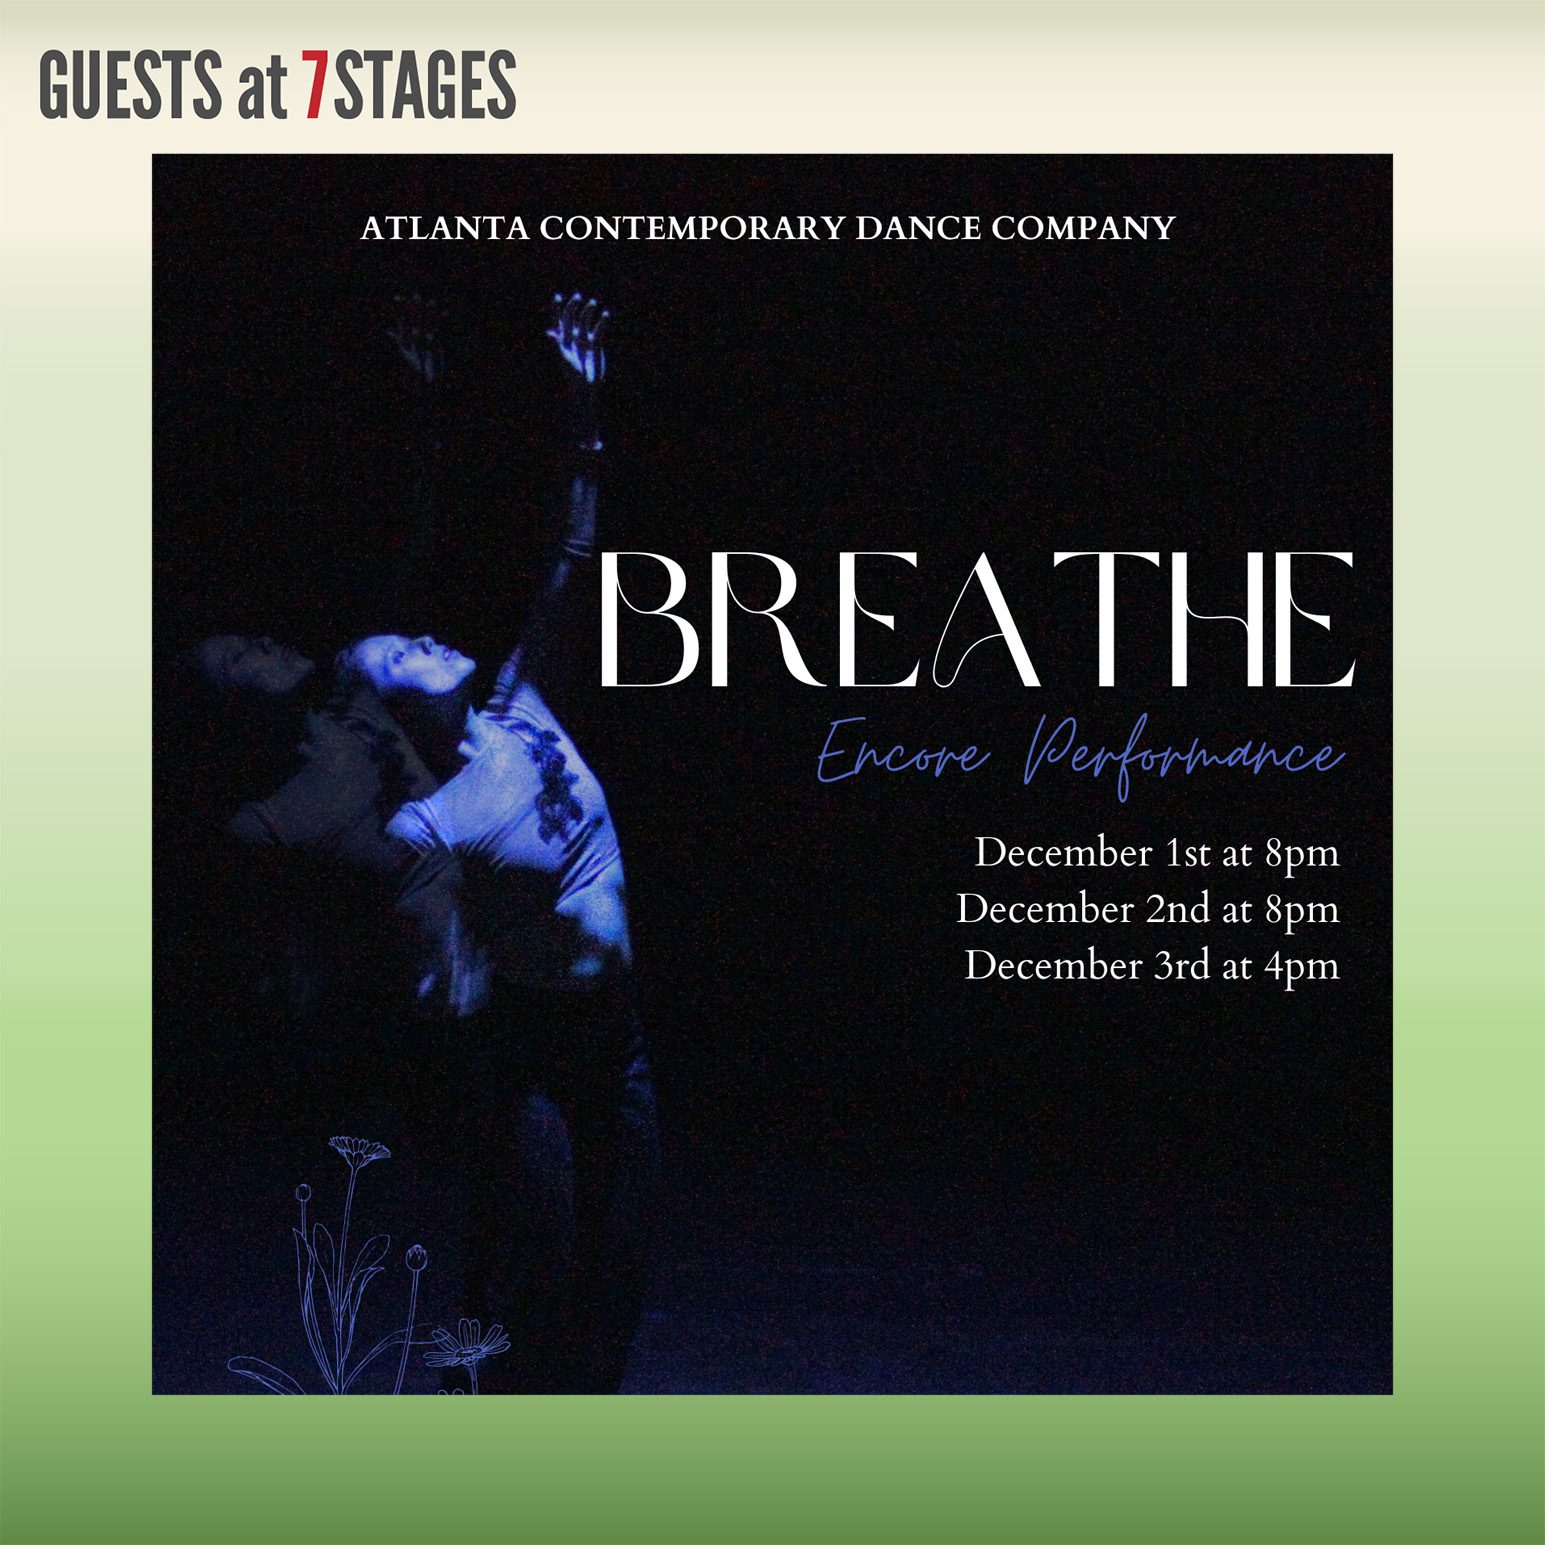 BREATHE Encore Performance 12.1-3.23 - 7 Stages Theatre